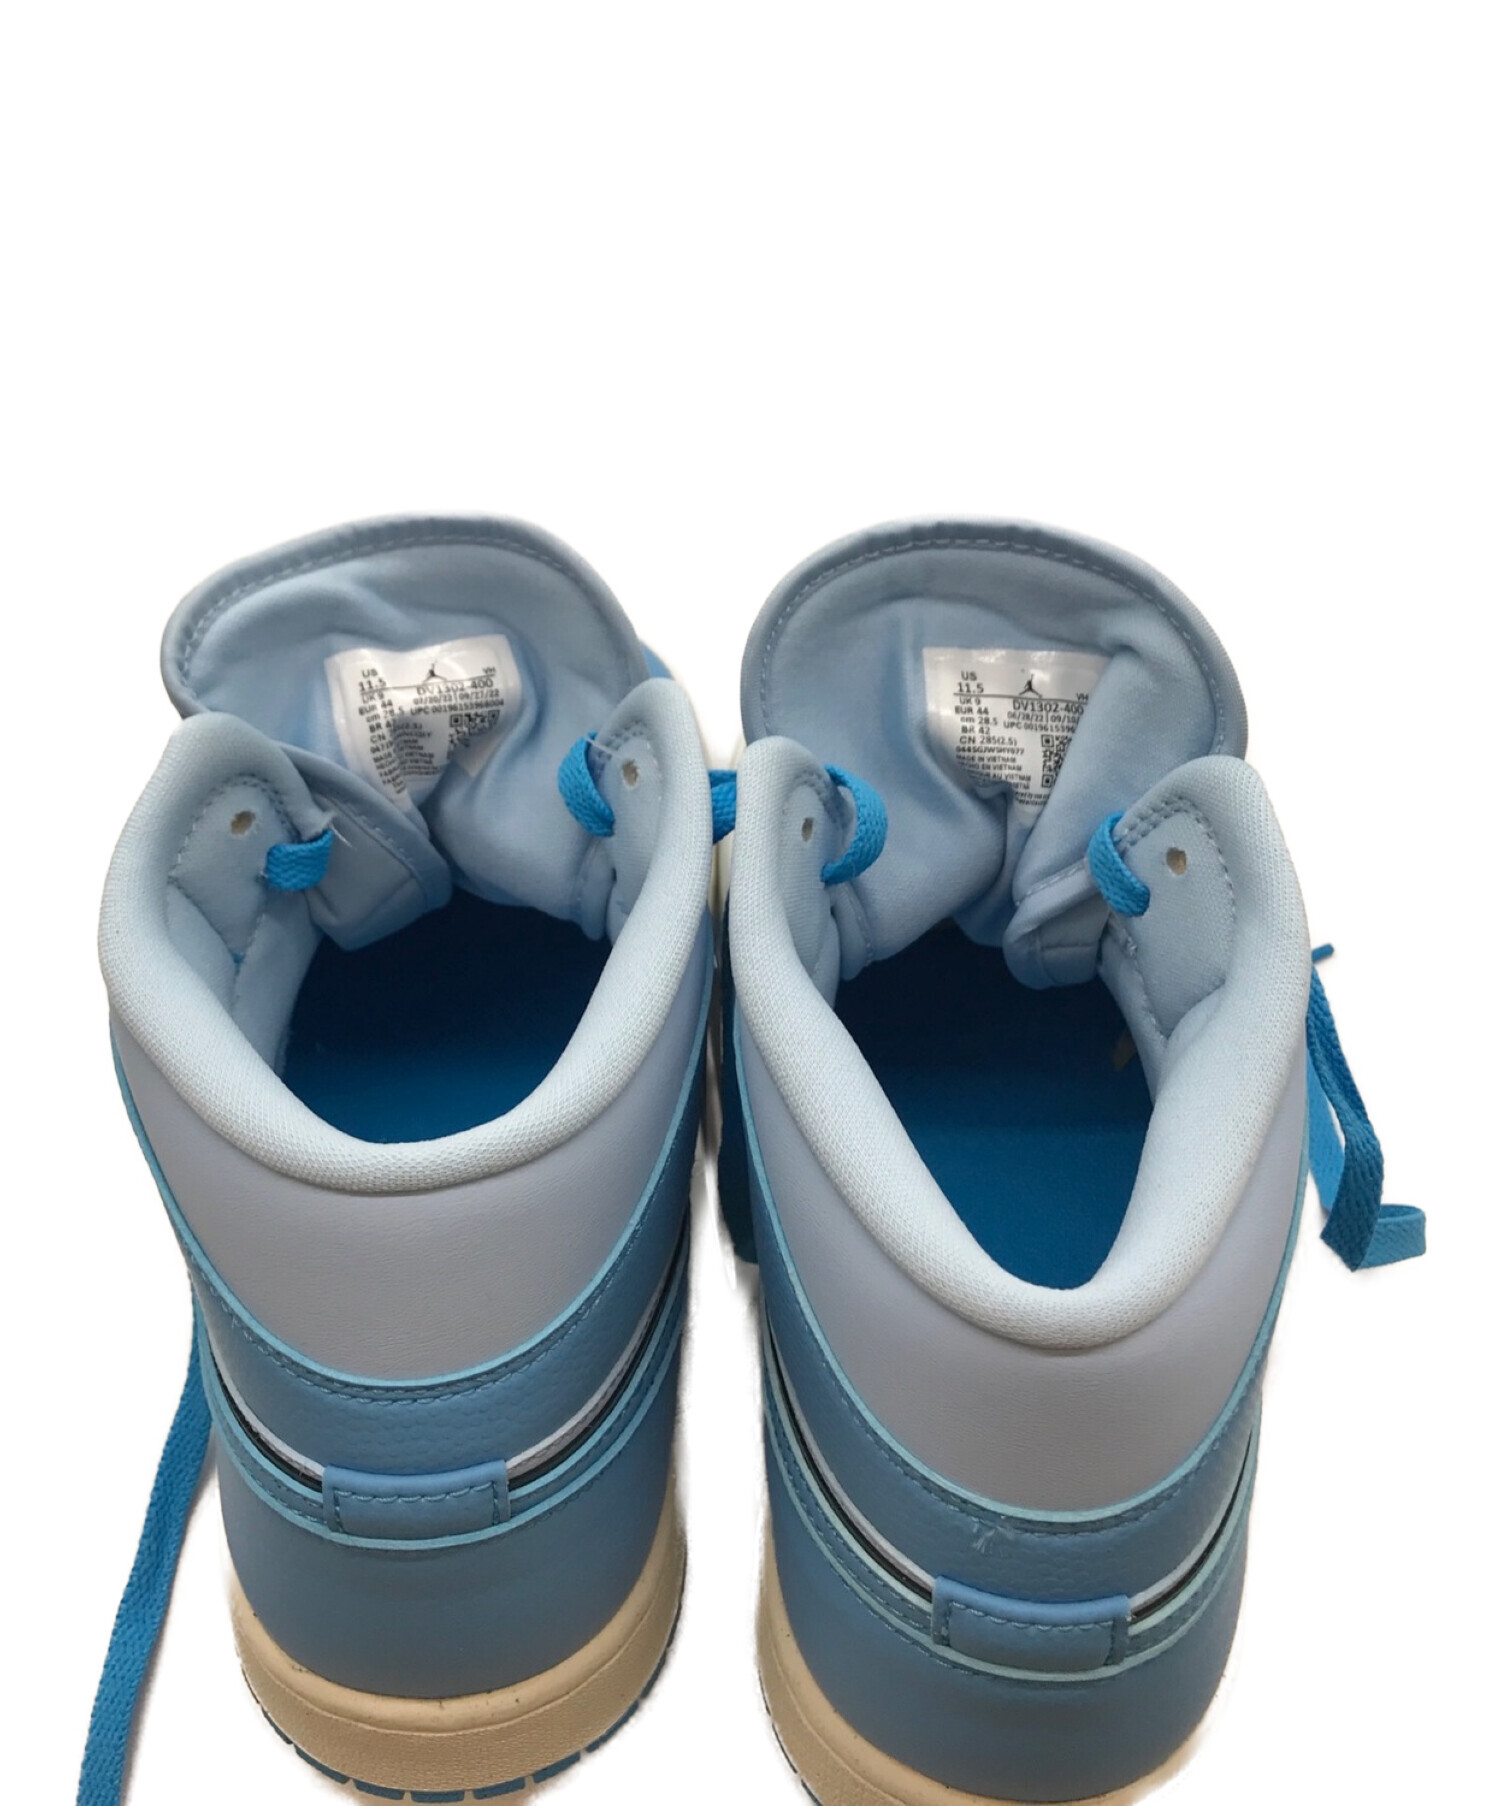 Nike ナイキ レディース スニーカー 【Nike Ai Max 97】 サイズ US_7.5W(24.5cm) Athletic Depa  tment Sail Unive sity Blue (Women's) スニーカー